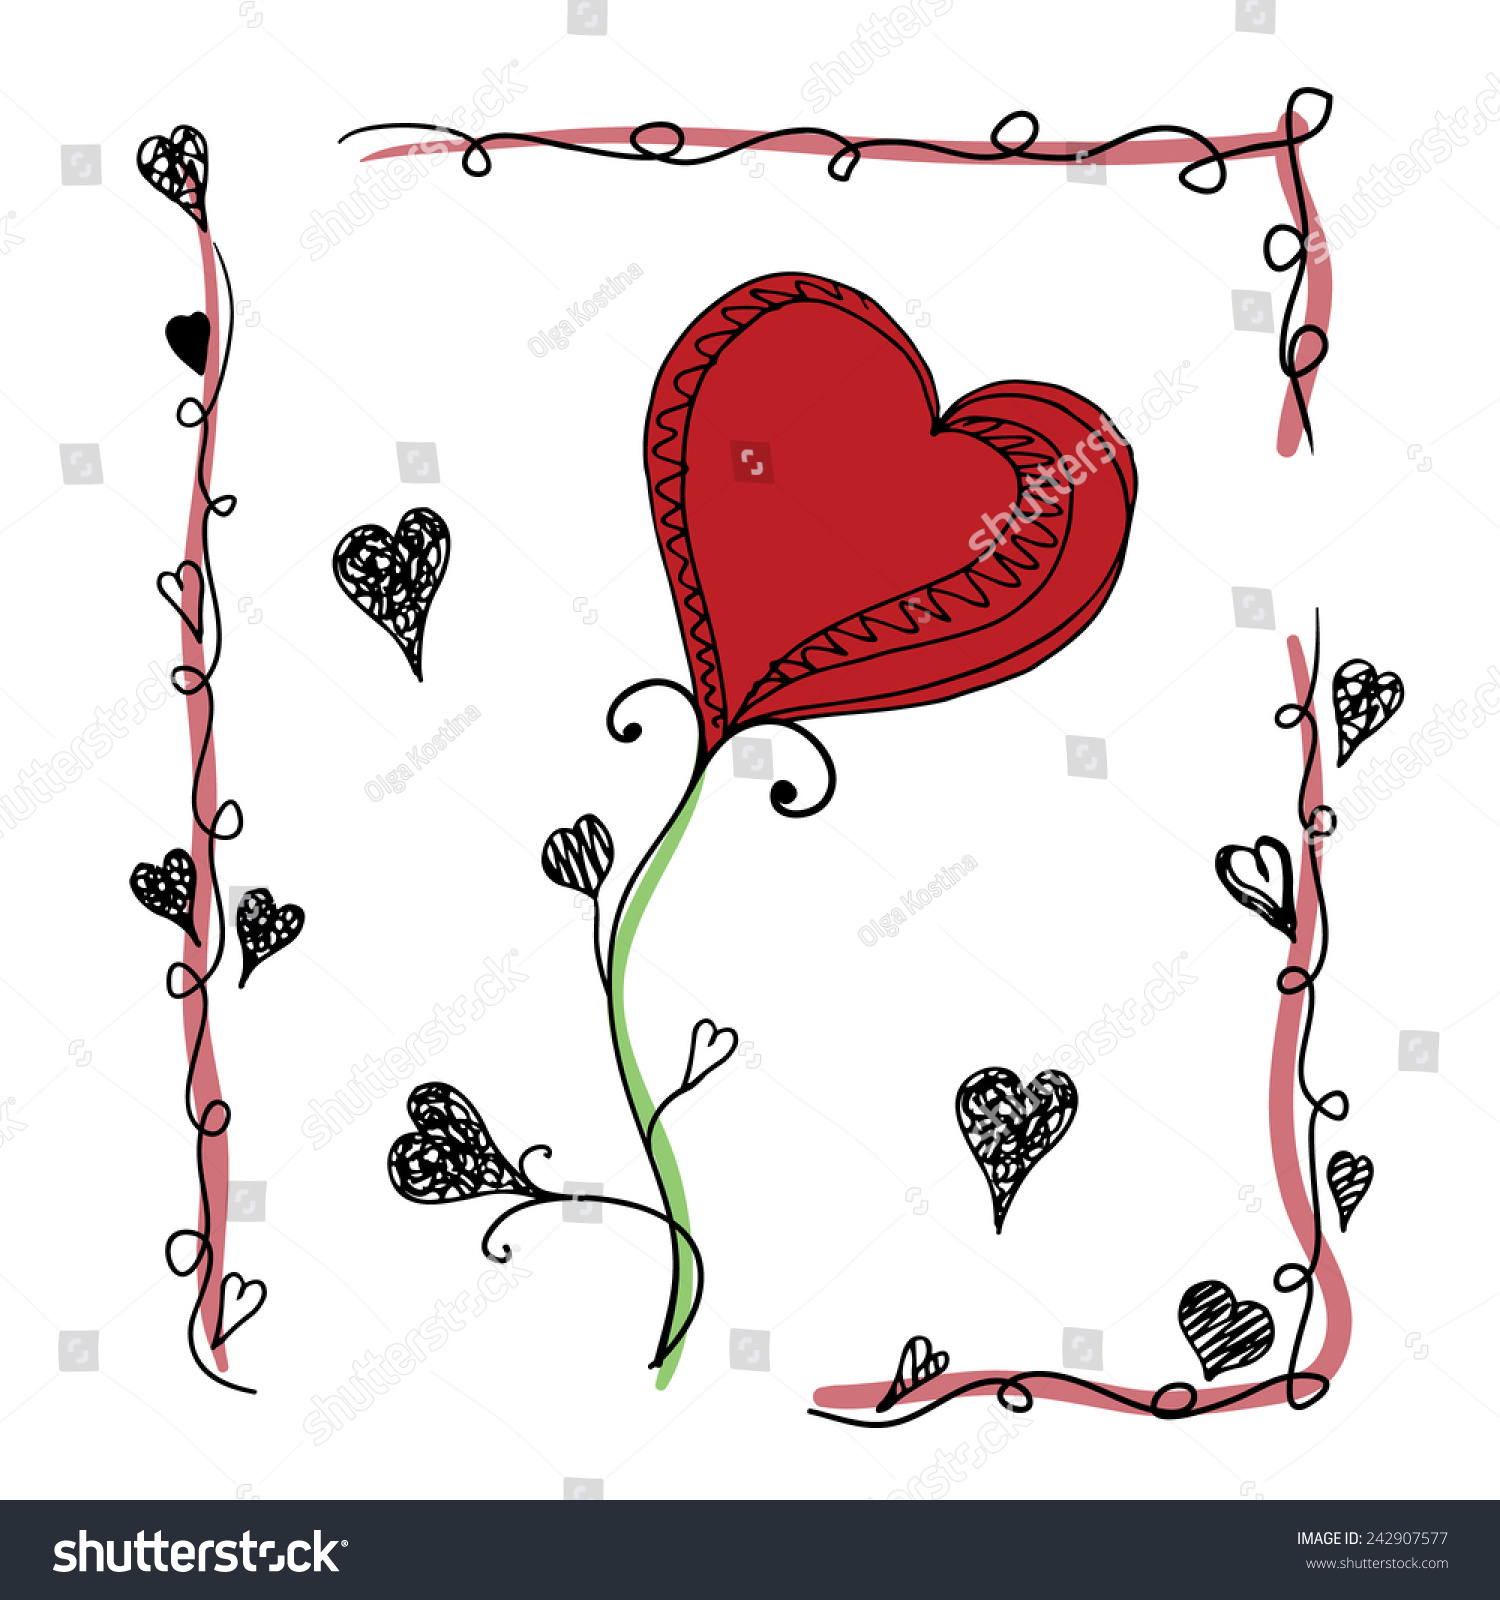 Hand Drawn Flower-Hearts Sketch Stock Vector Illustration 242907577